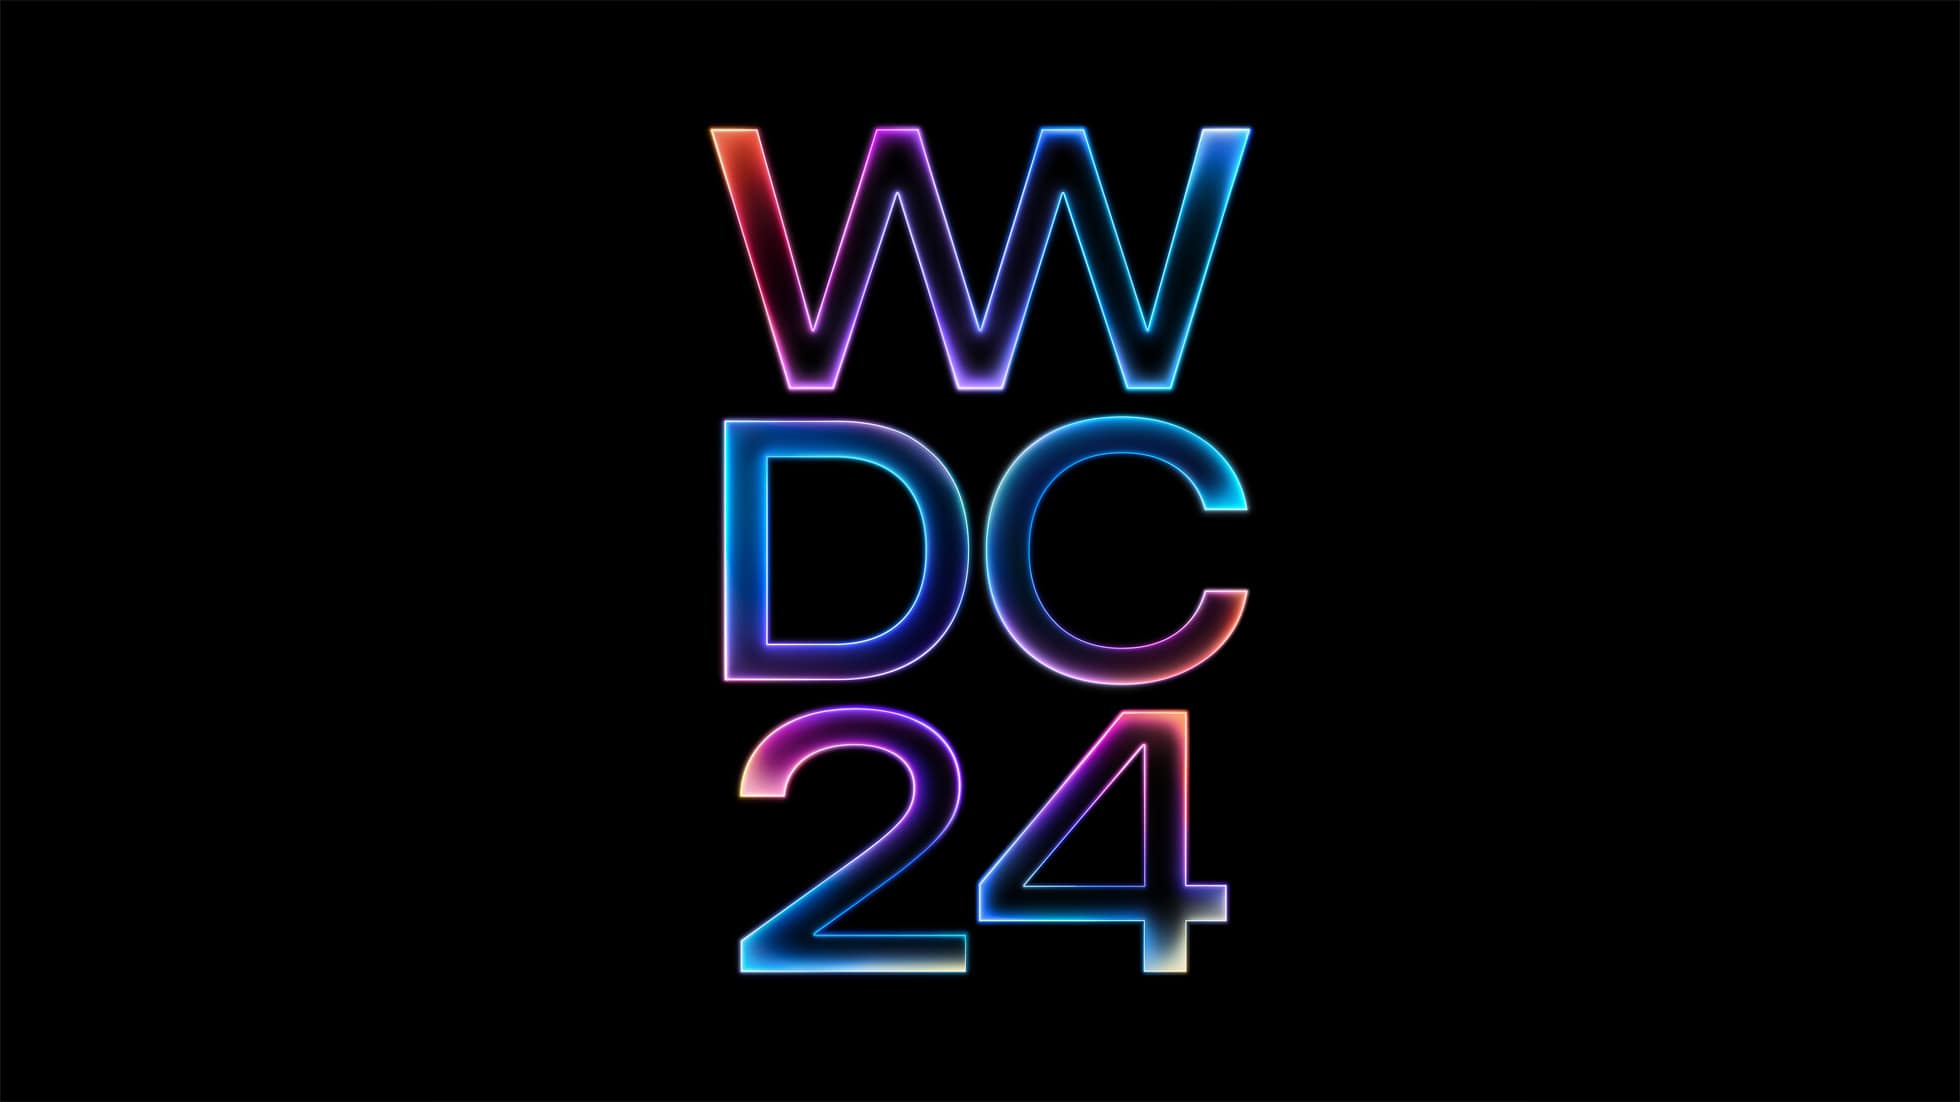 Apple WWDC24 event announcement hero